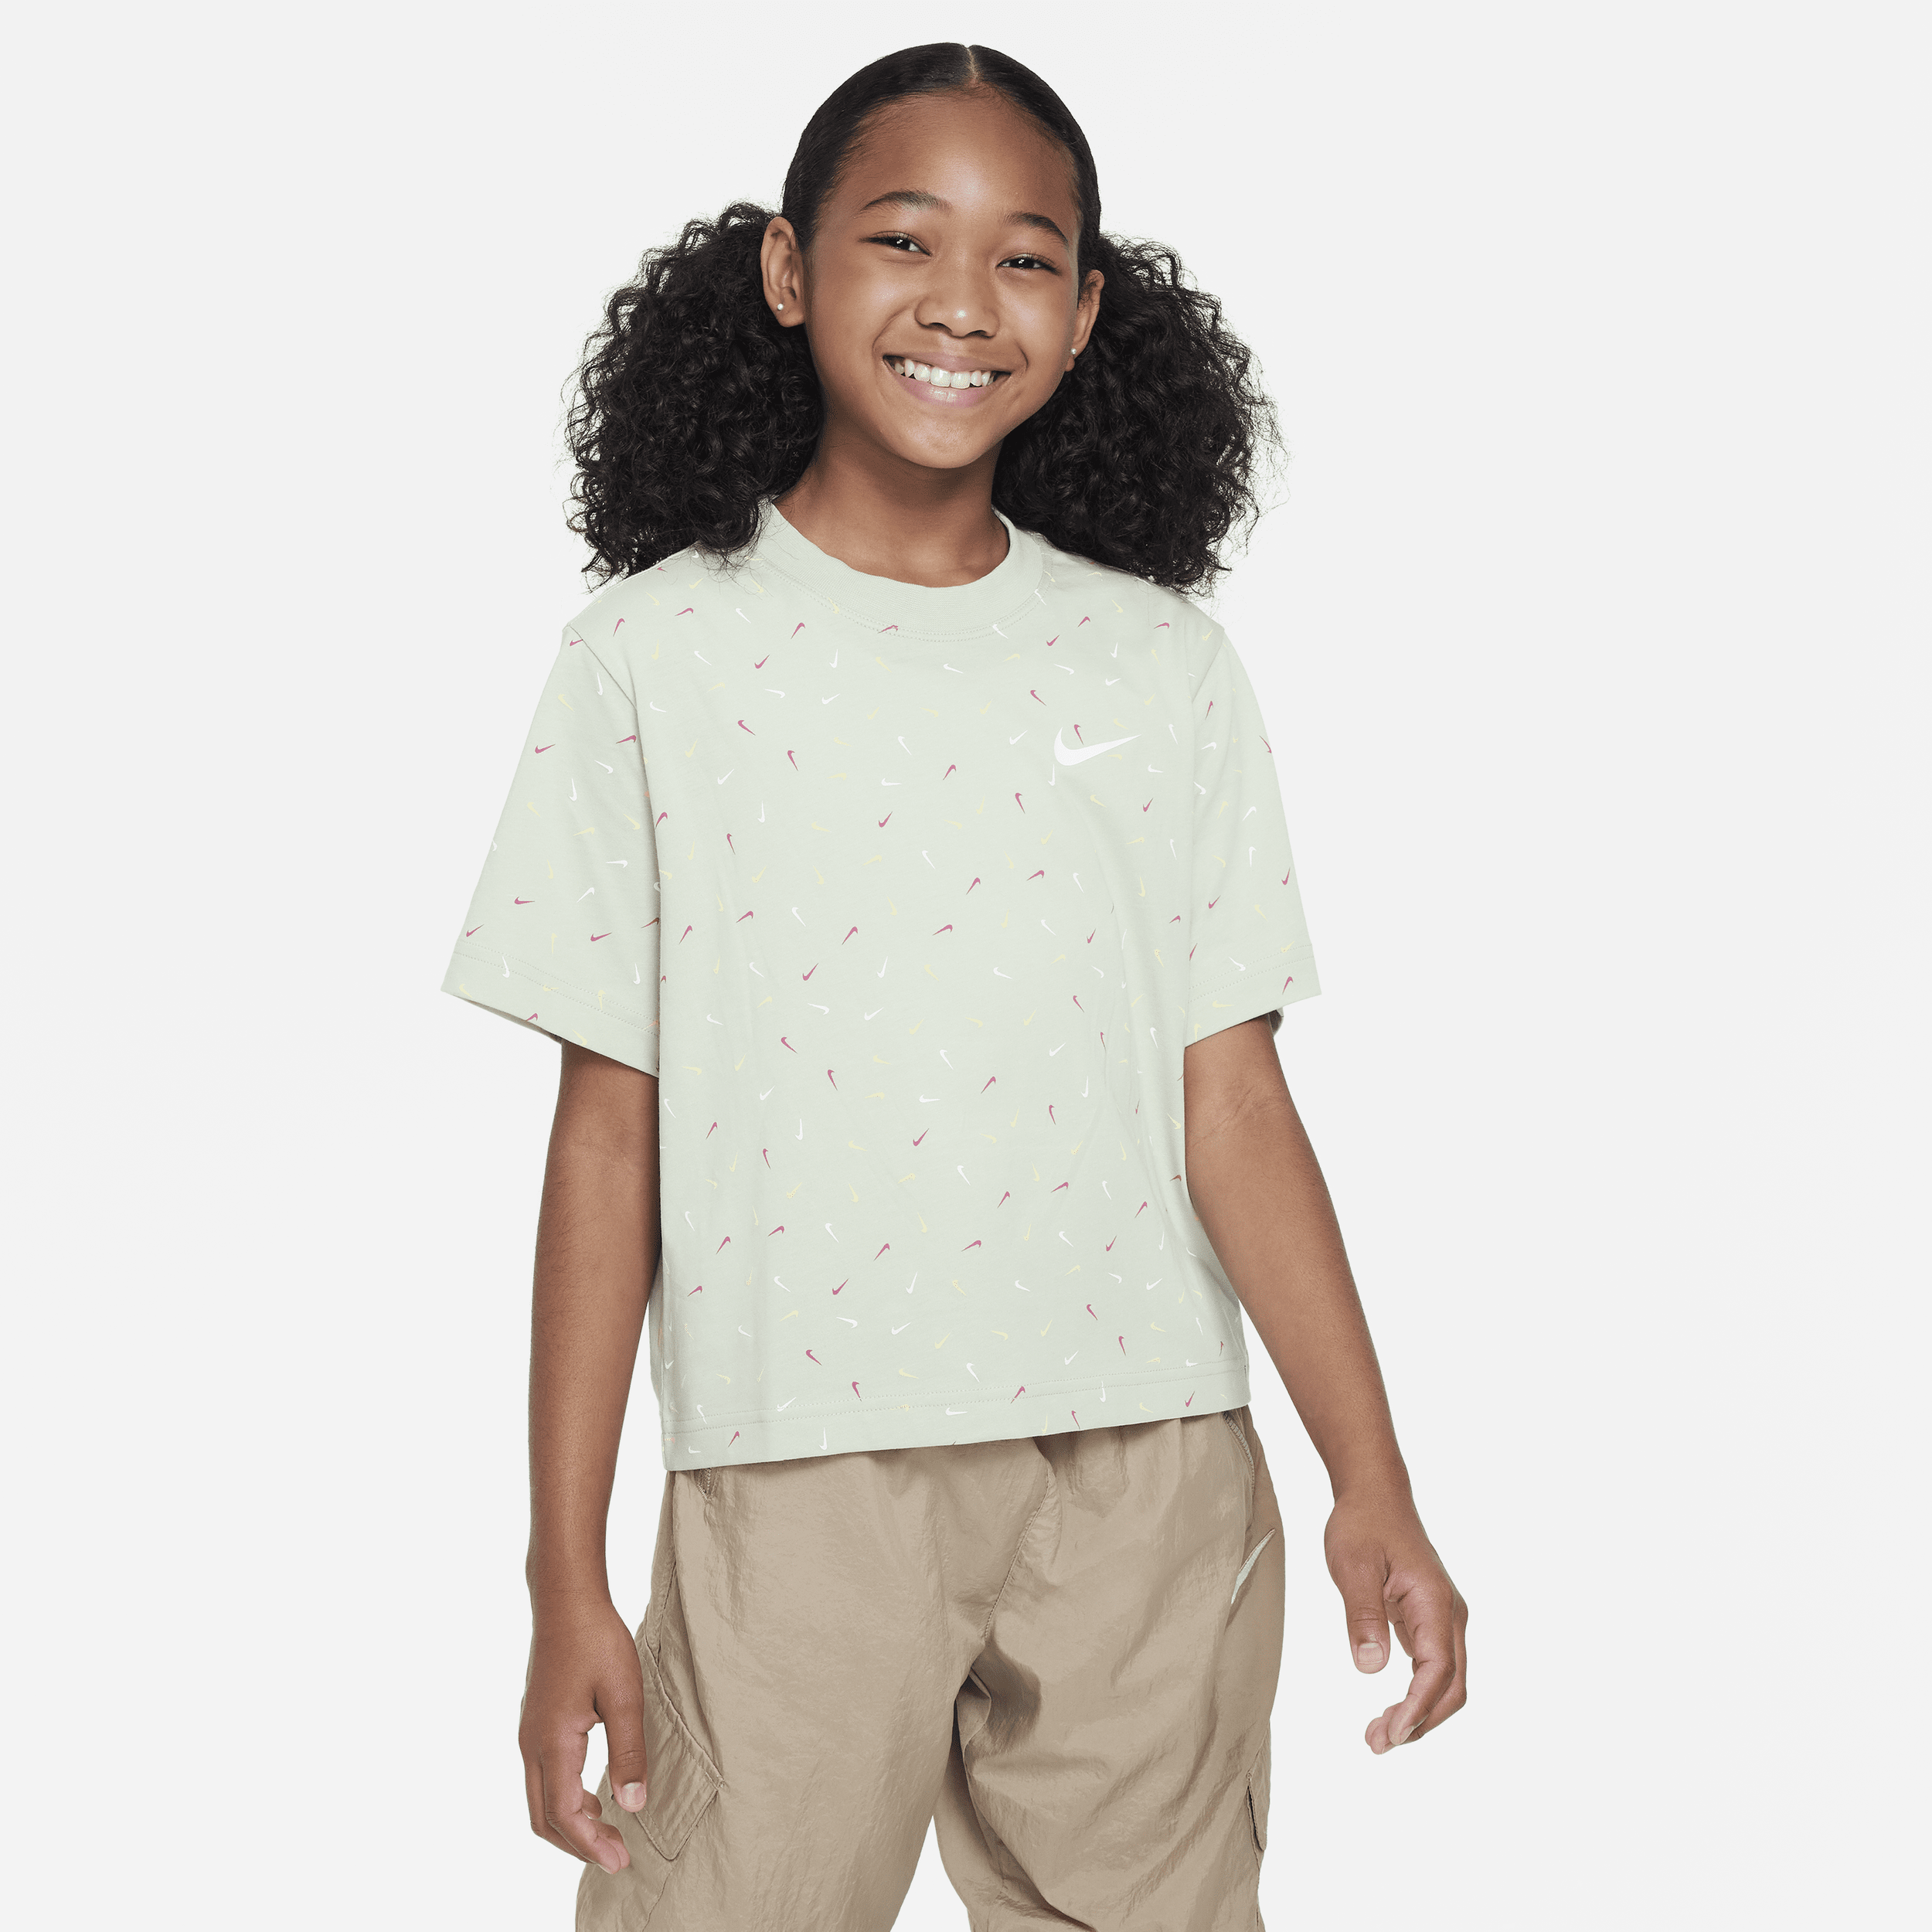 Nike Sportswear-T-shirt til større børn (piger) - grøn